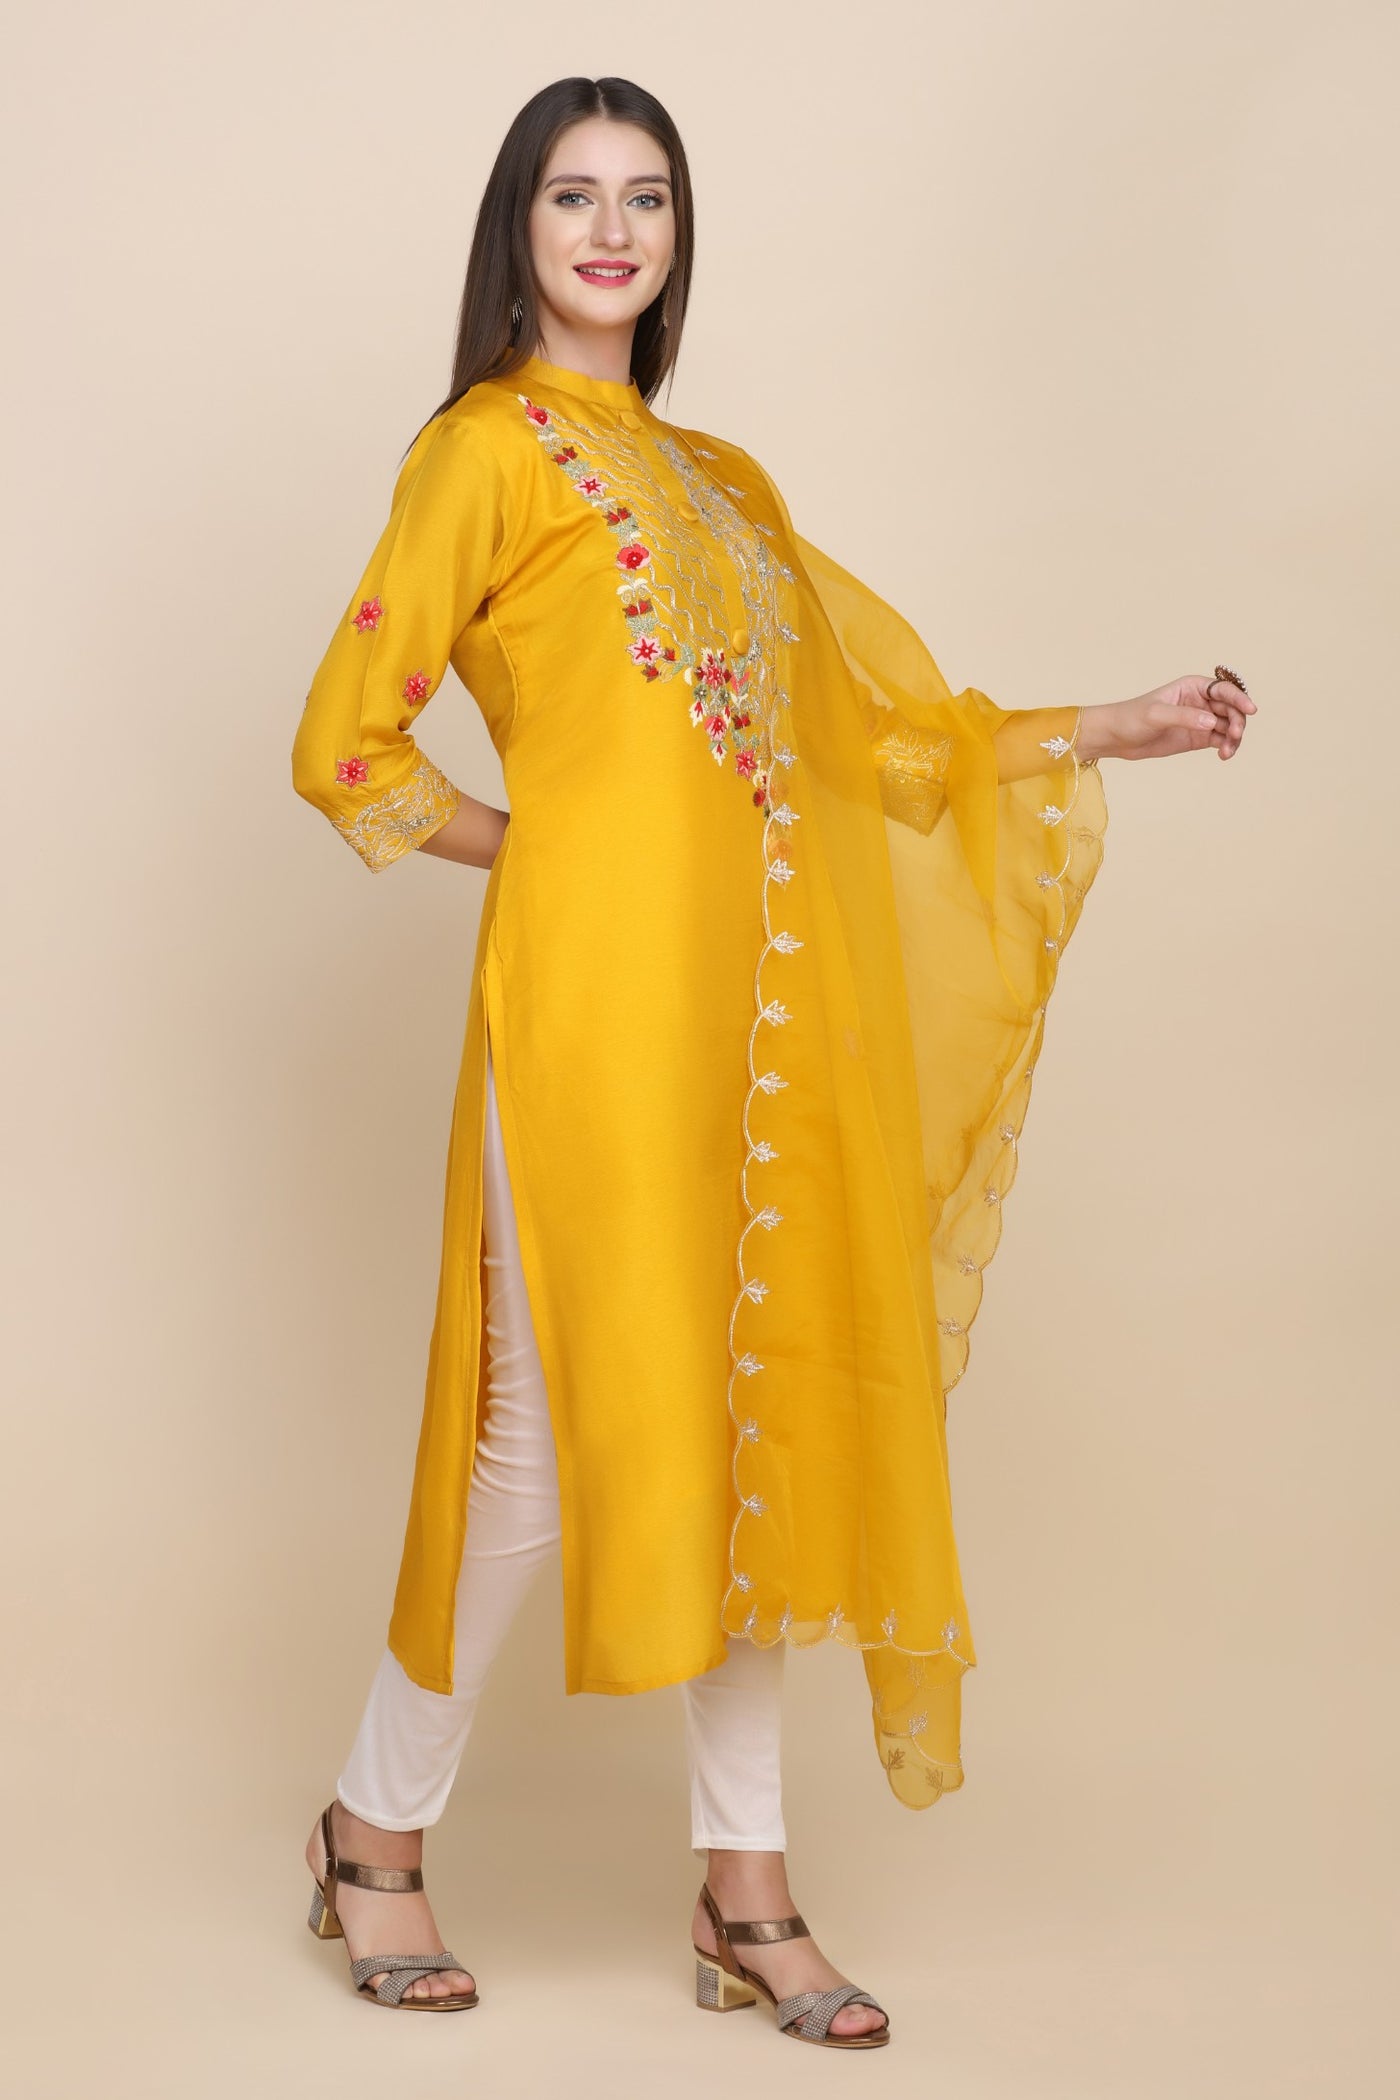 model posing wearing yellow embroidered kurti